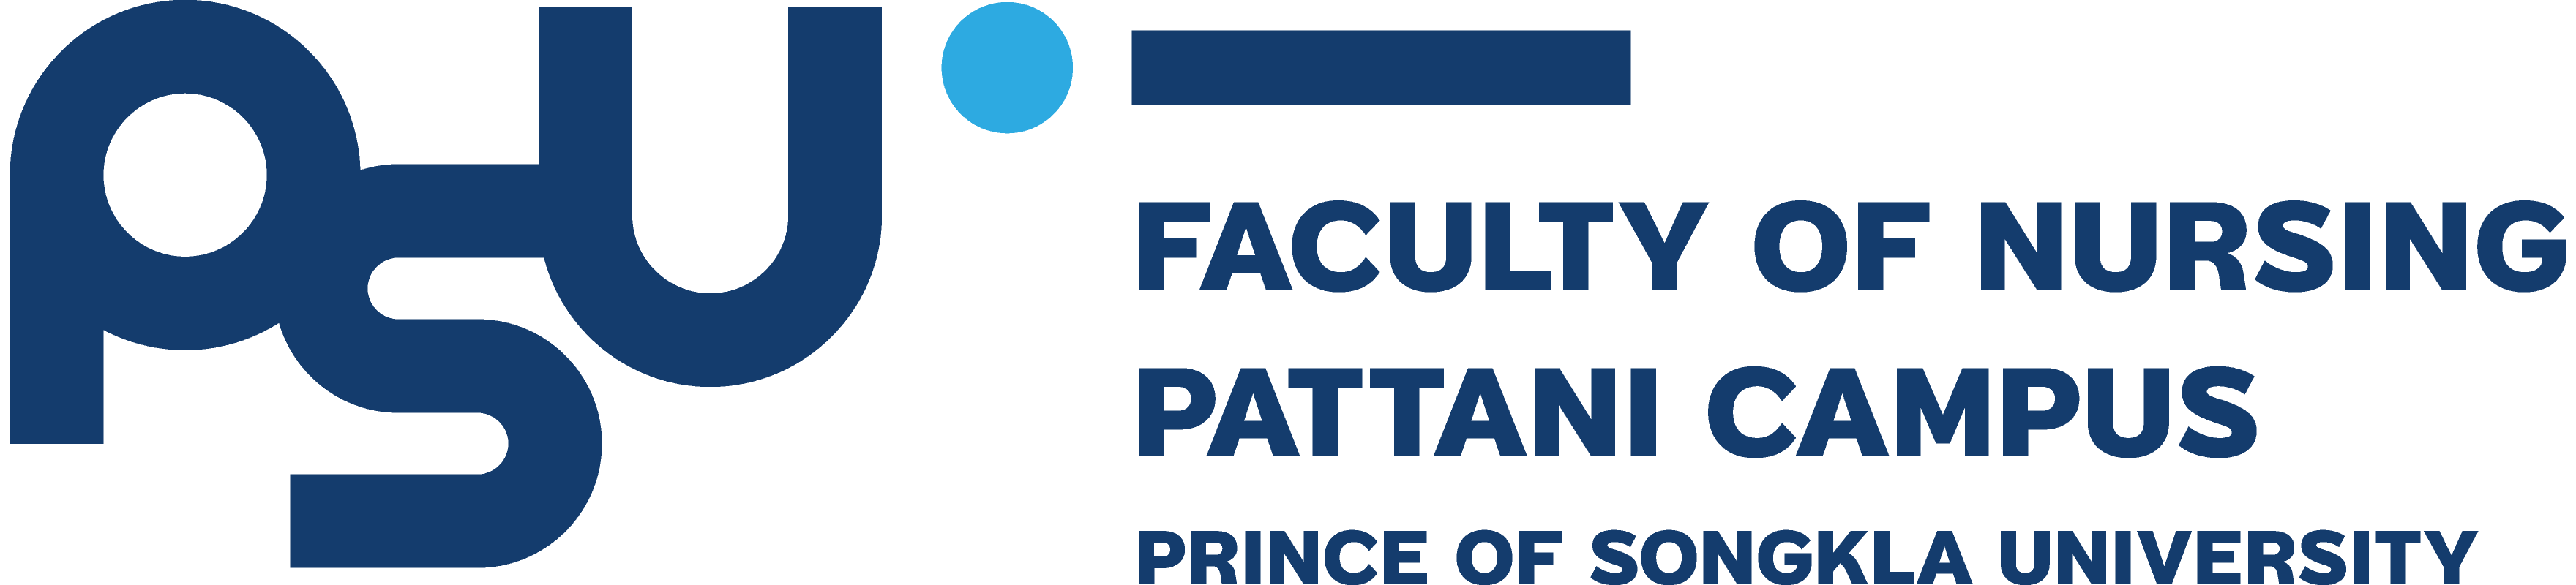 .: Faculty of Nursing PSU, Pattani Campus :.